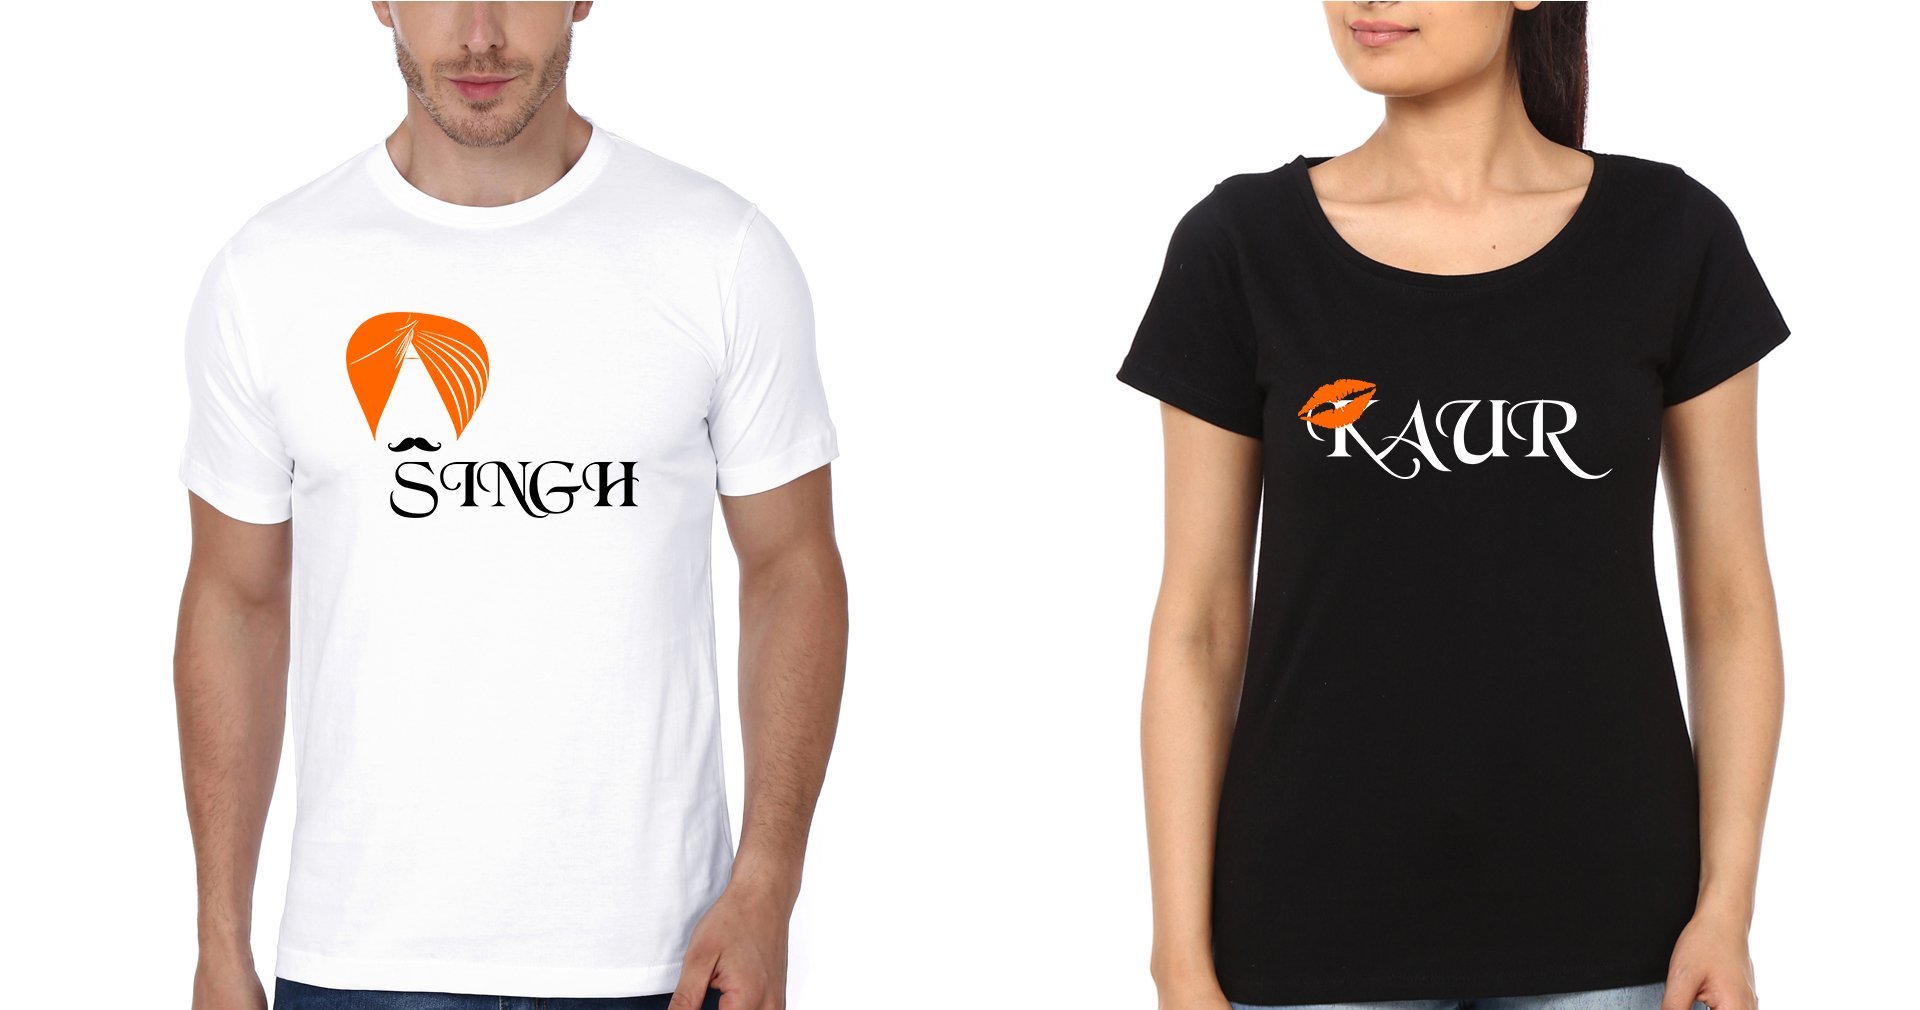 Singh And Kaur Couple Half Sleeves T-Shirts -FunkyTees